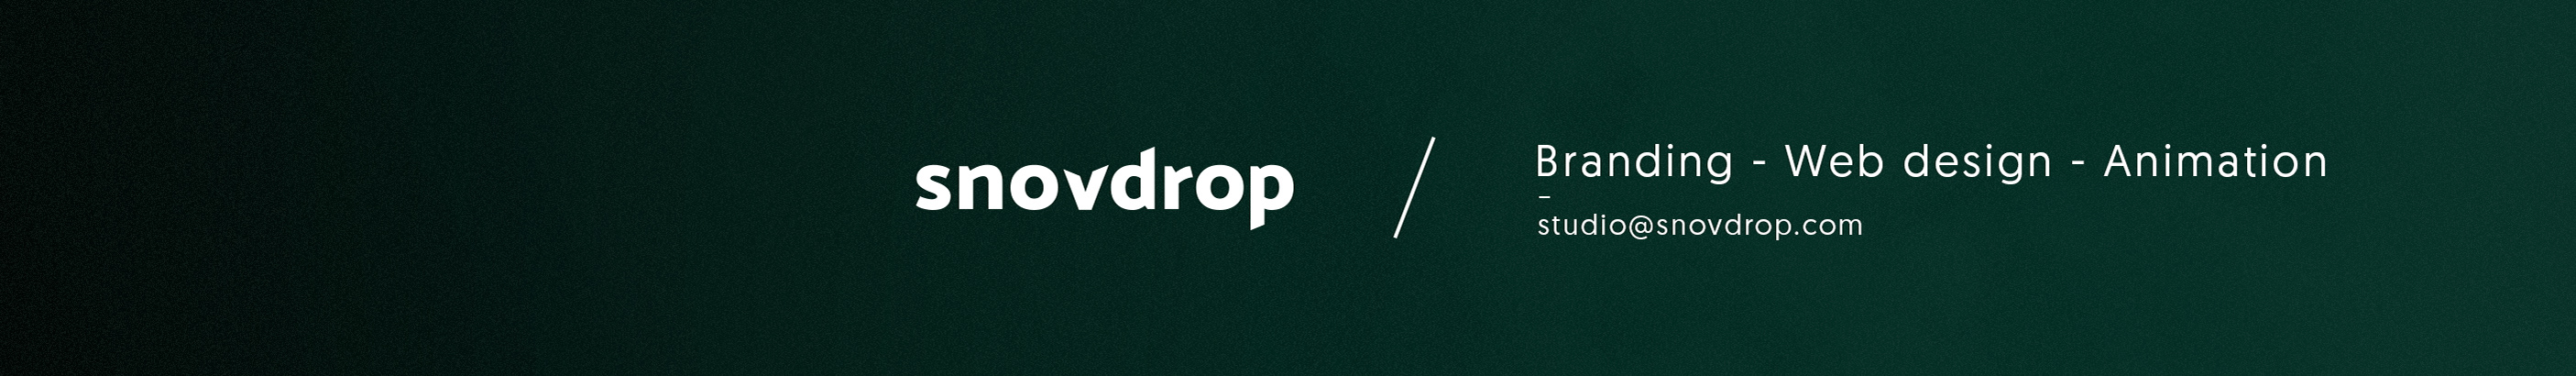 Snovdrop Studio's profile banner